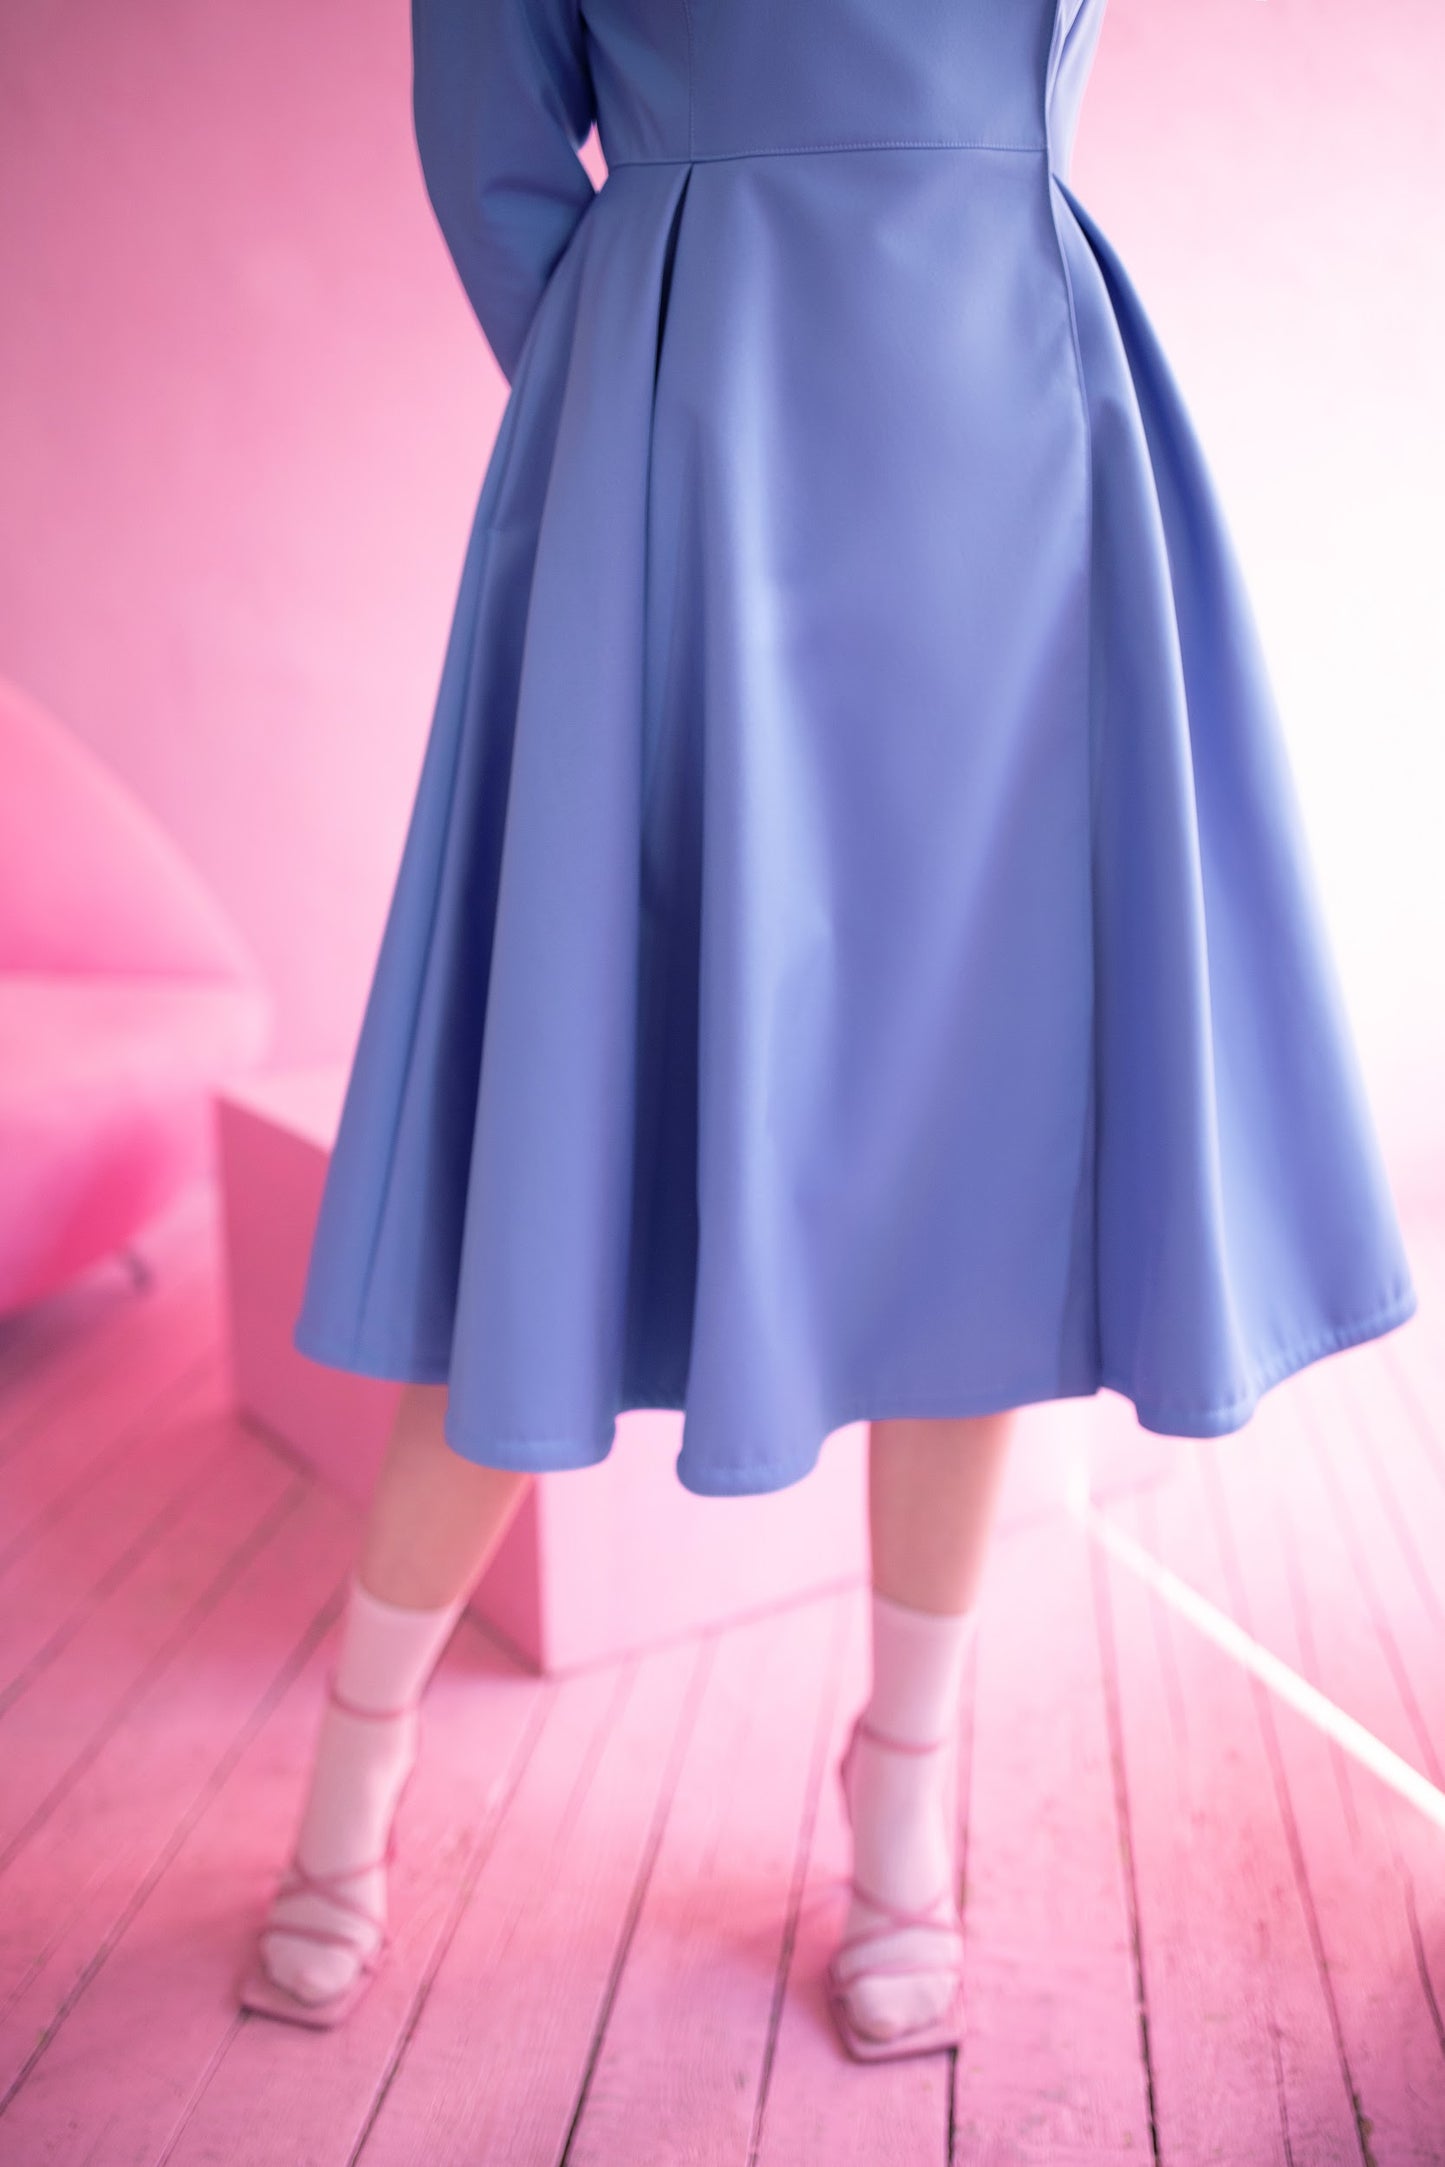 Voluminous Skirt of Blue Waterproof Design Coat